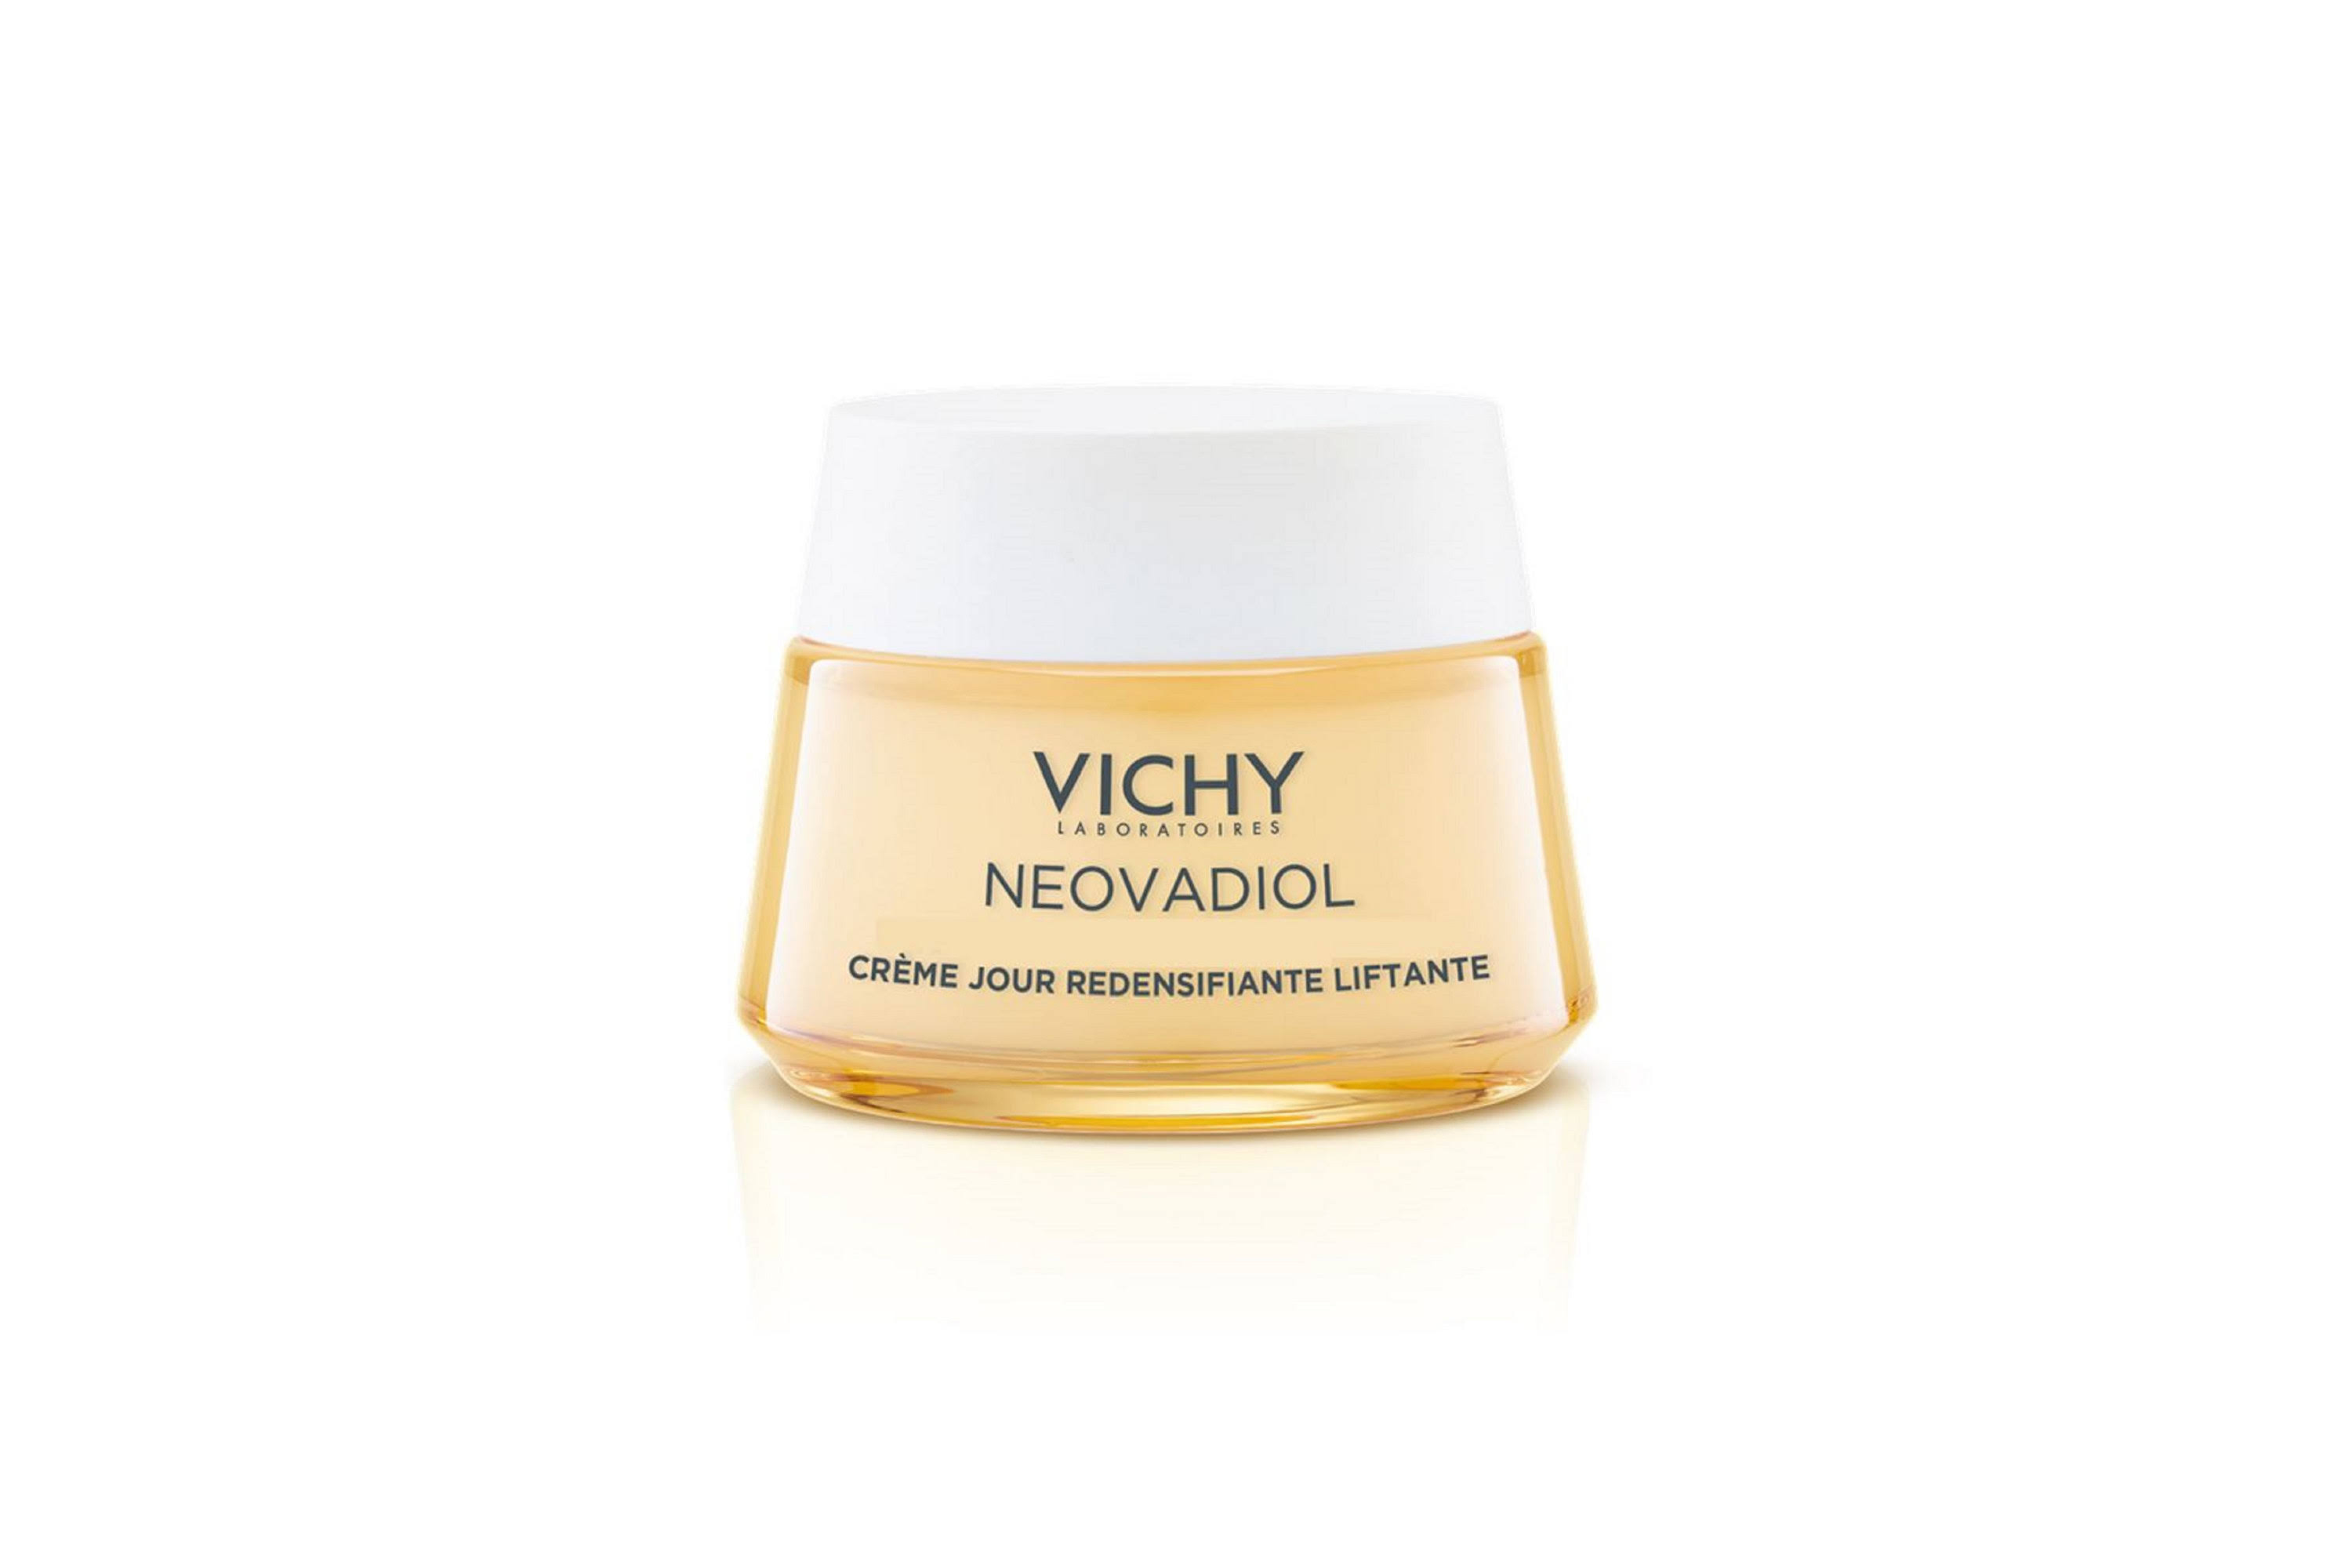 Vichy Neovadiol Peri-Menopause Day Cream Dry Skin 50ml